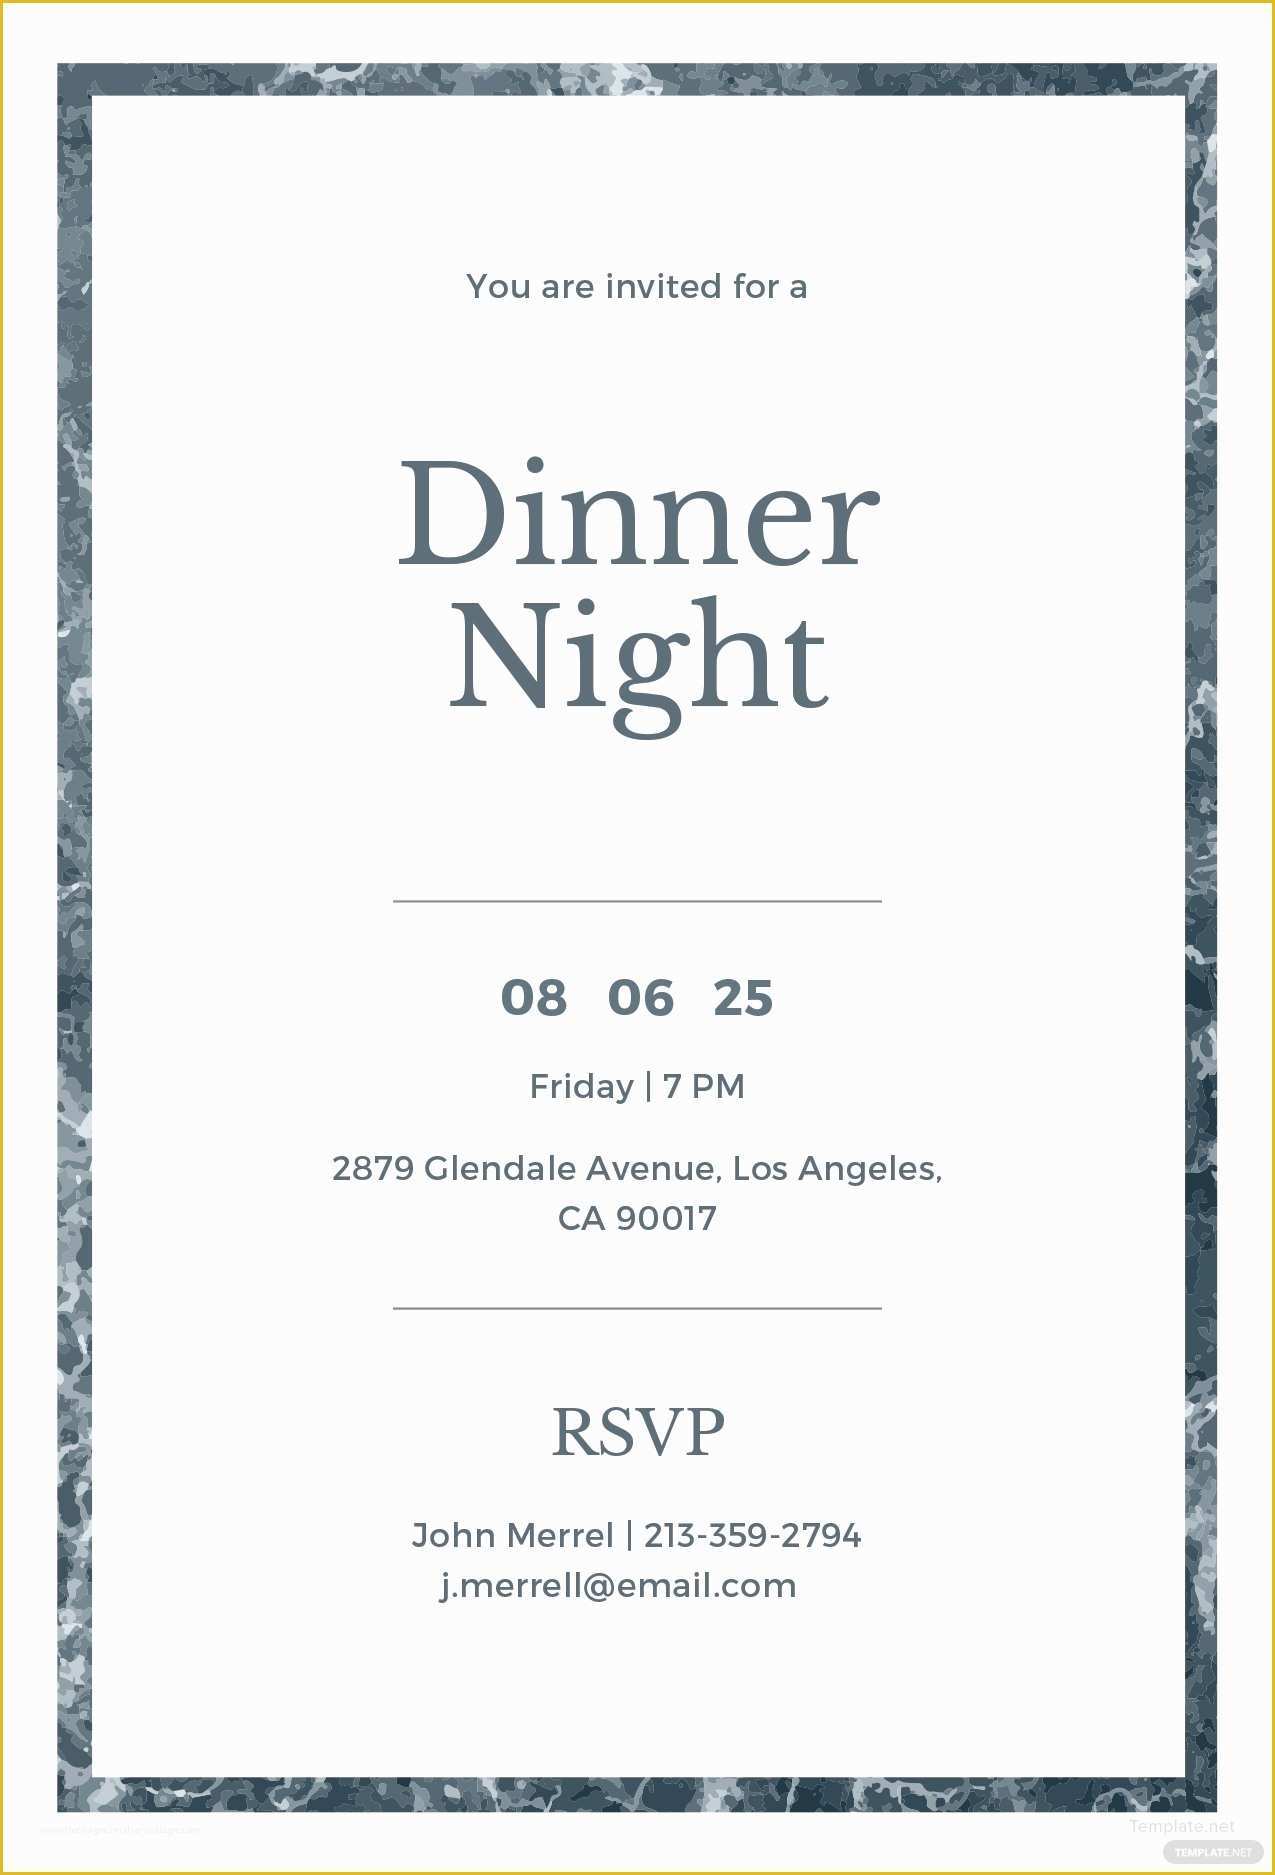 Free Photo Invitation Templates Of Free Sample Dinner Invitation Template In Adobe